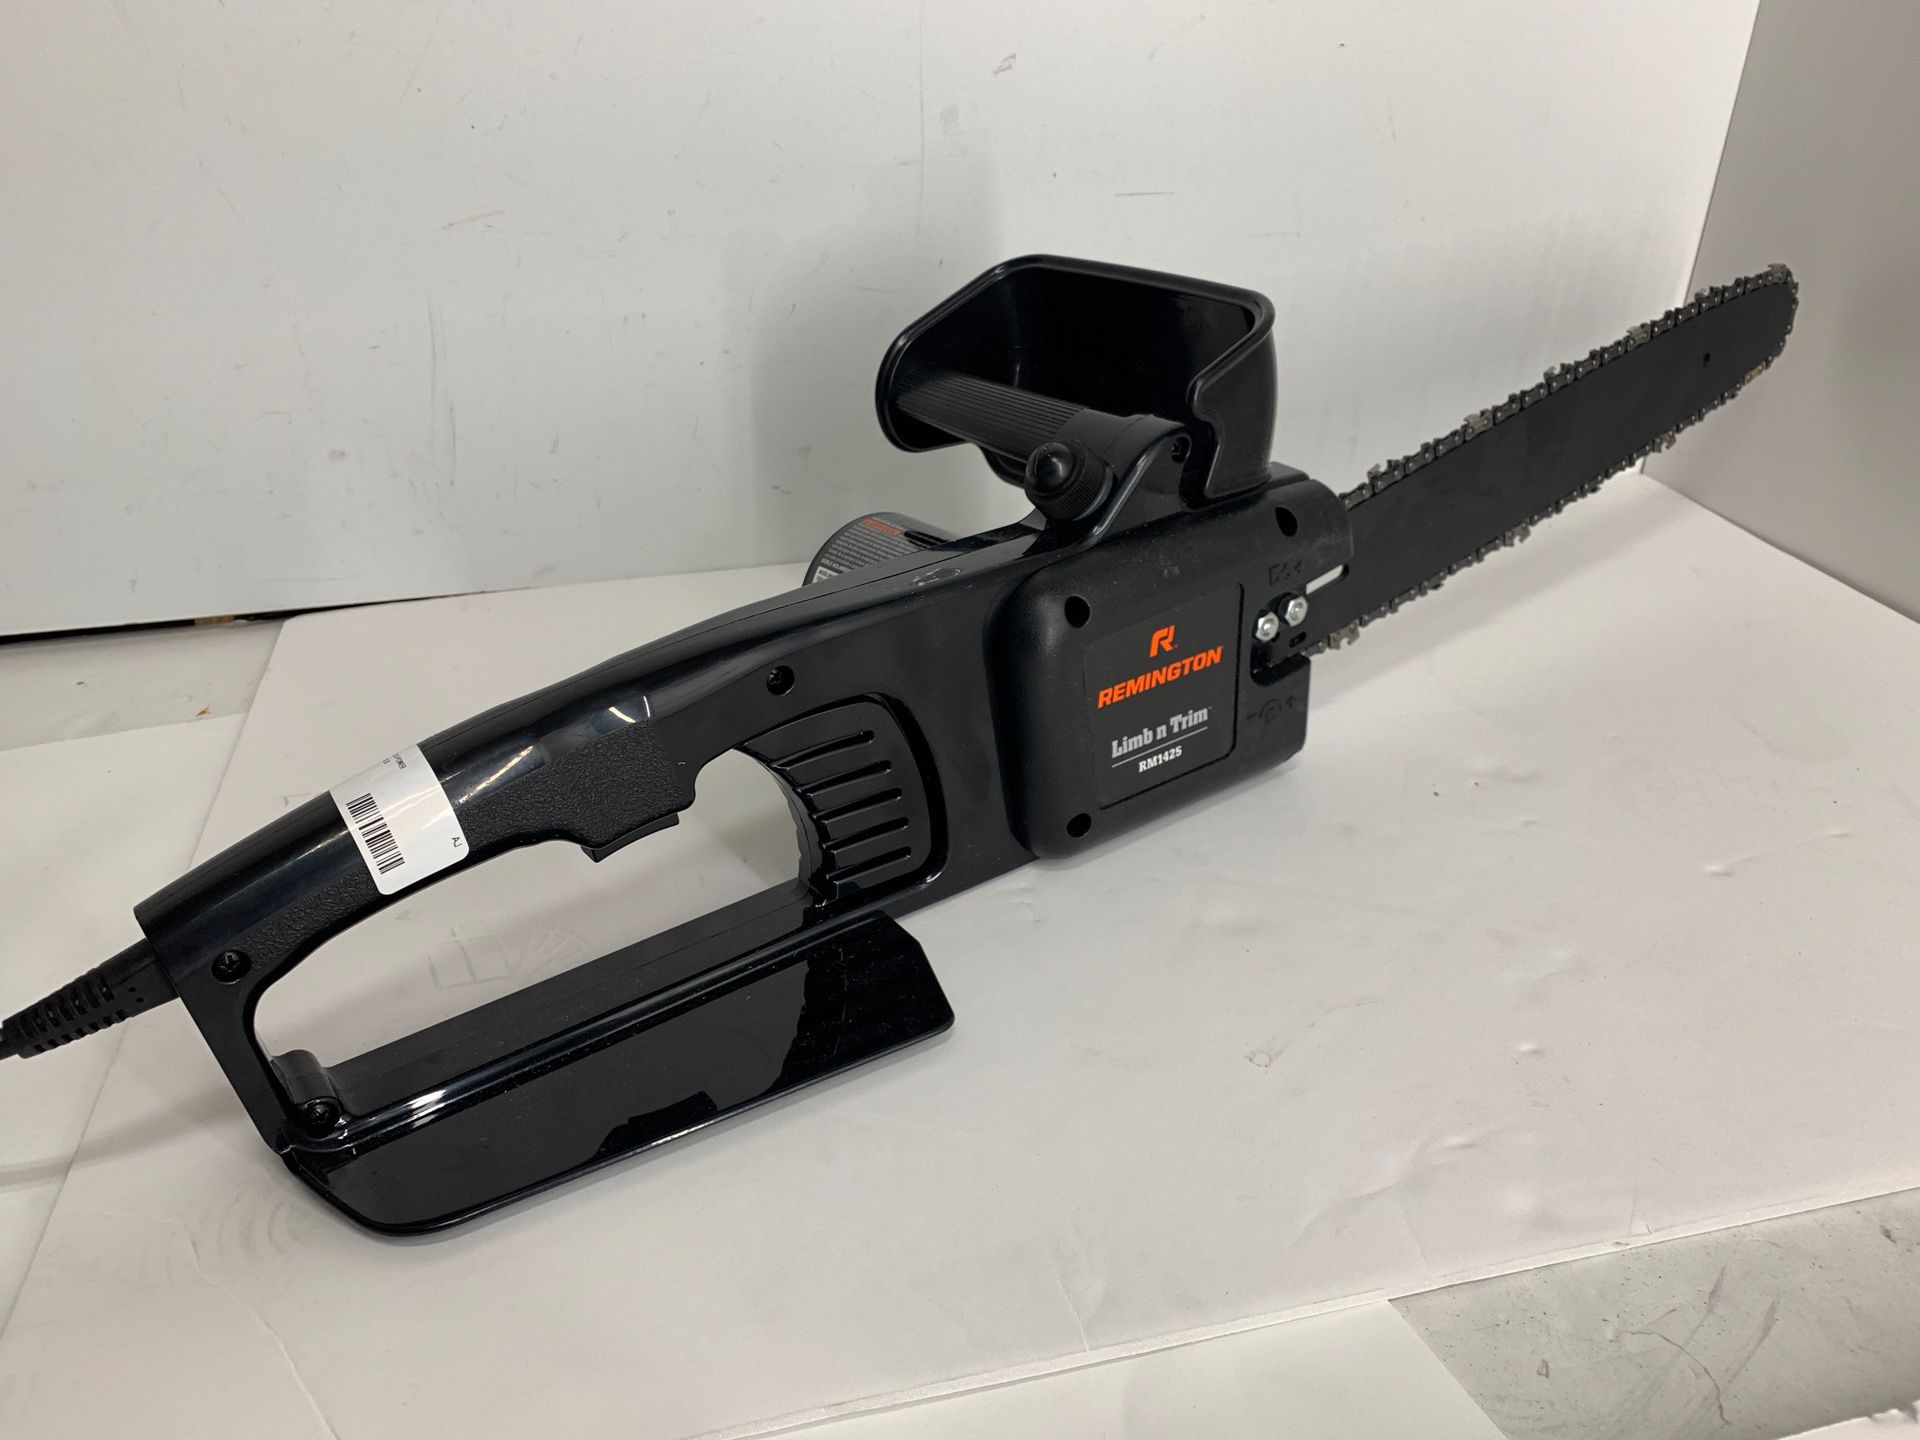 Remington RM1425 corded chainsaw 85647